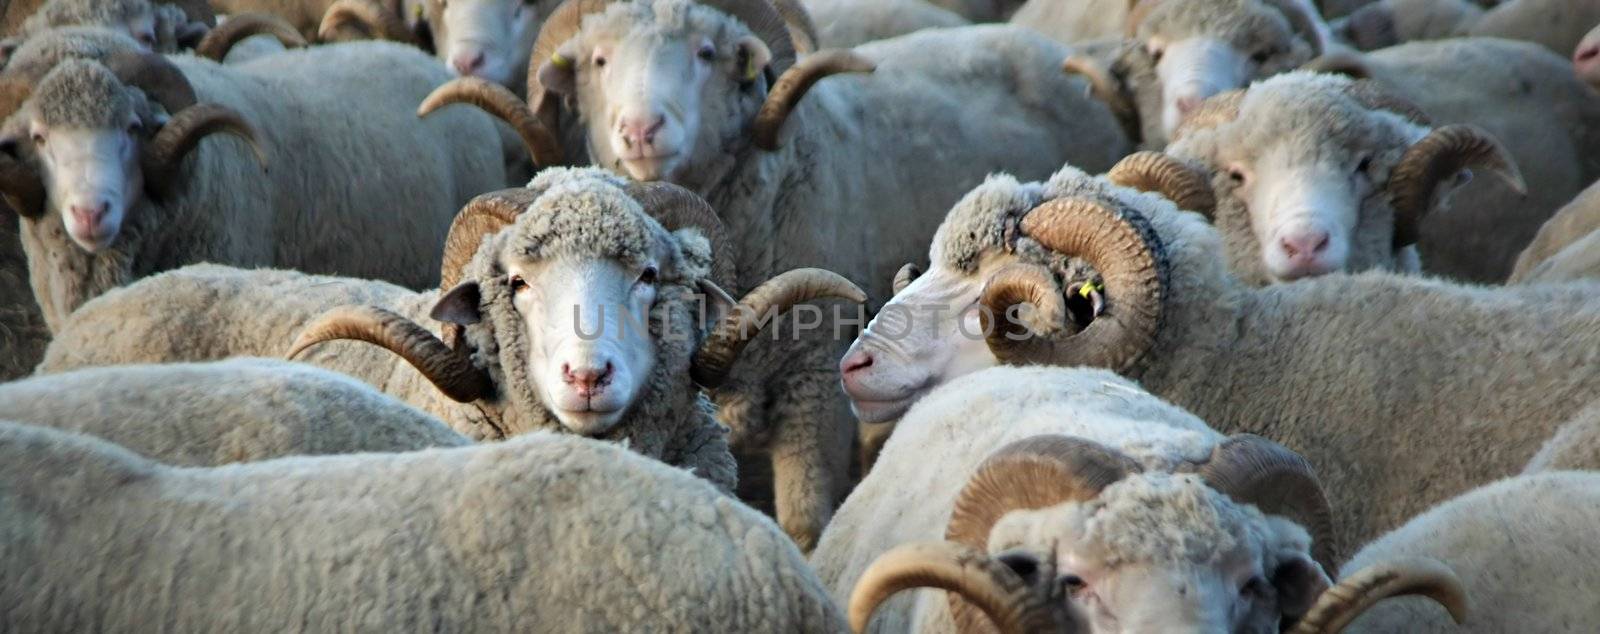 One Sheep looking at the Camera